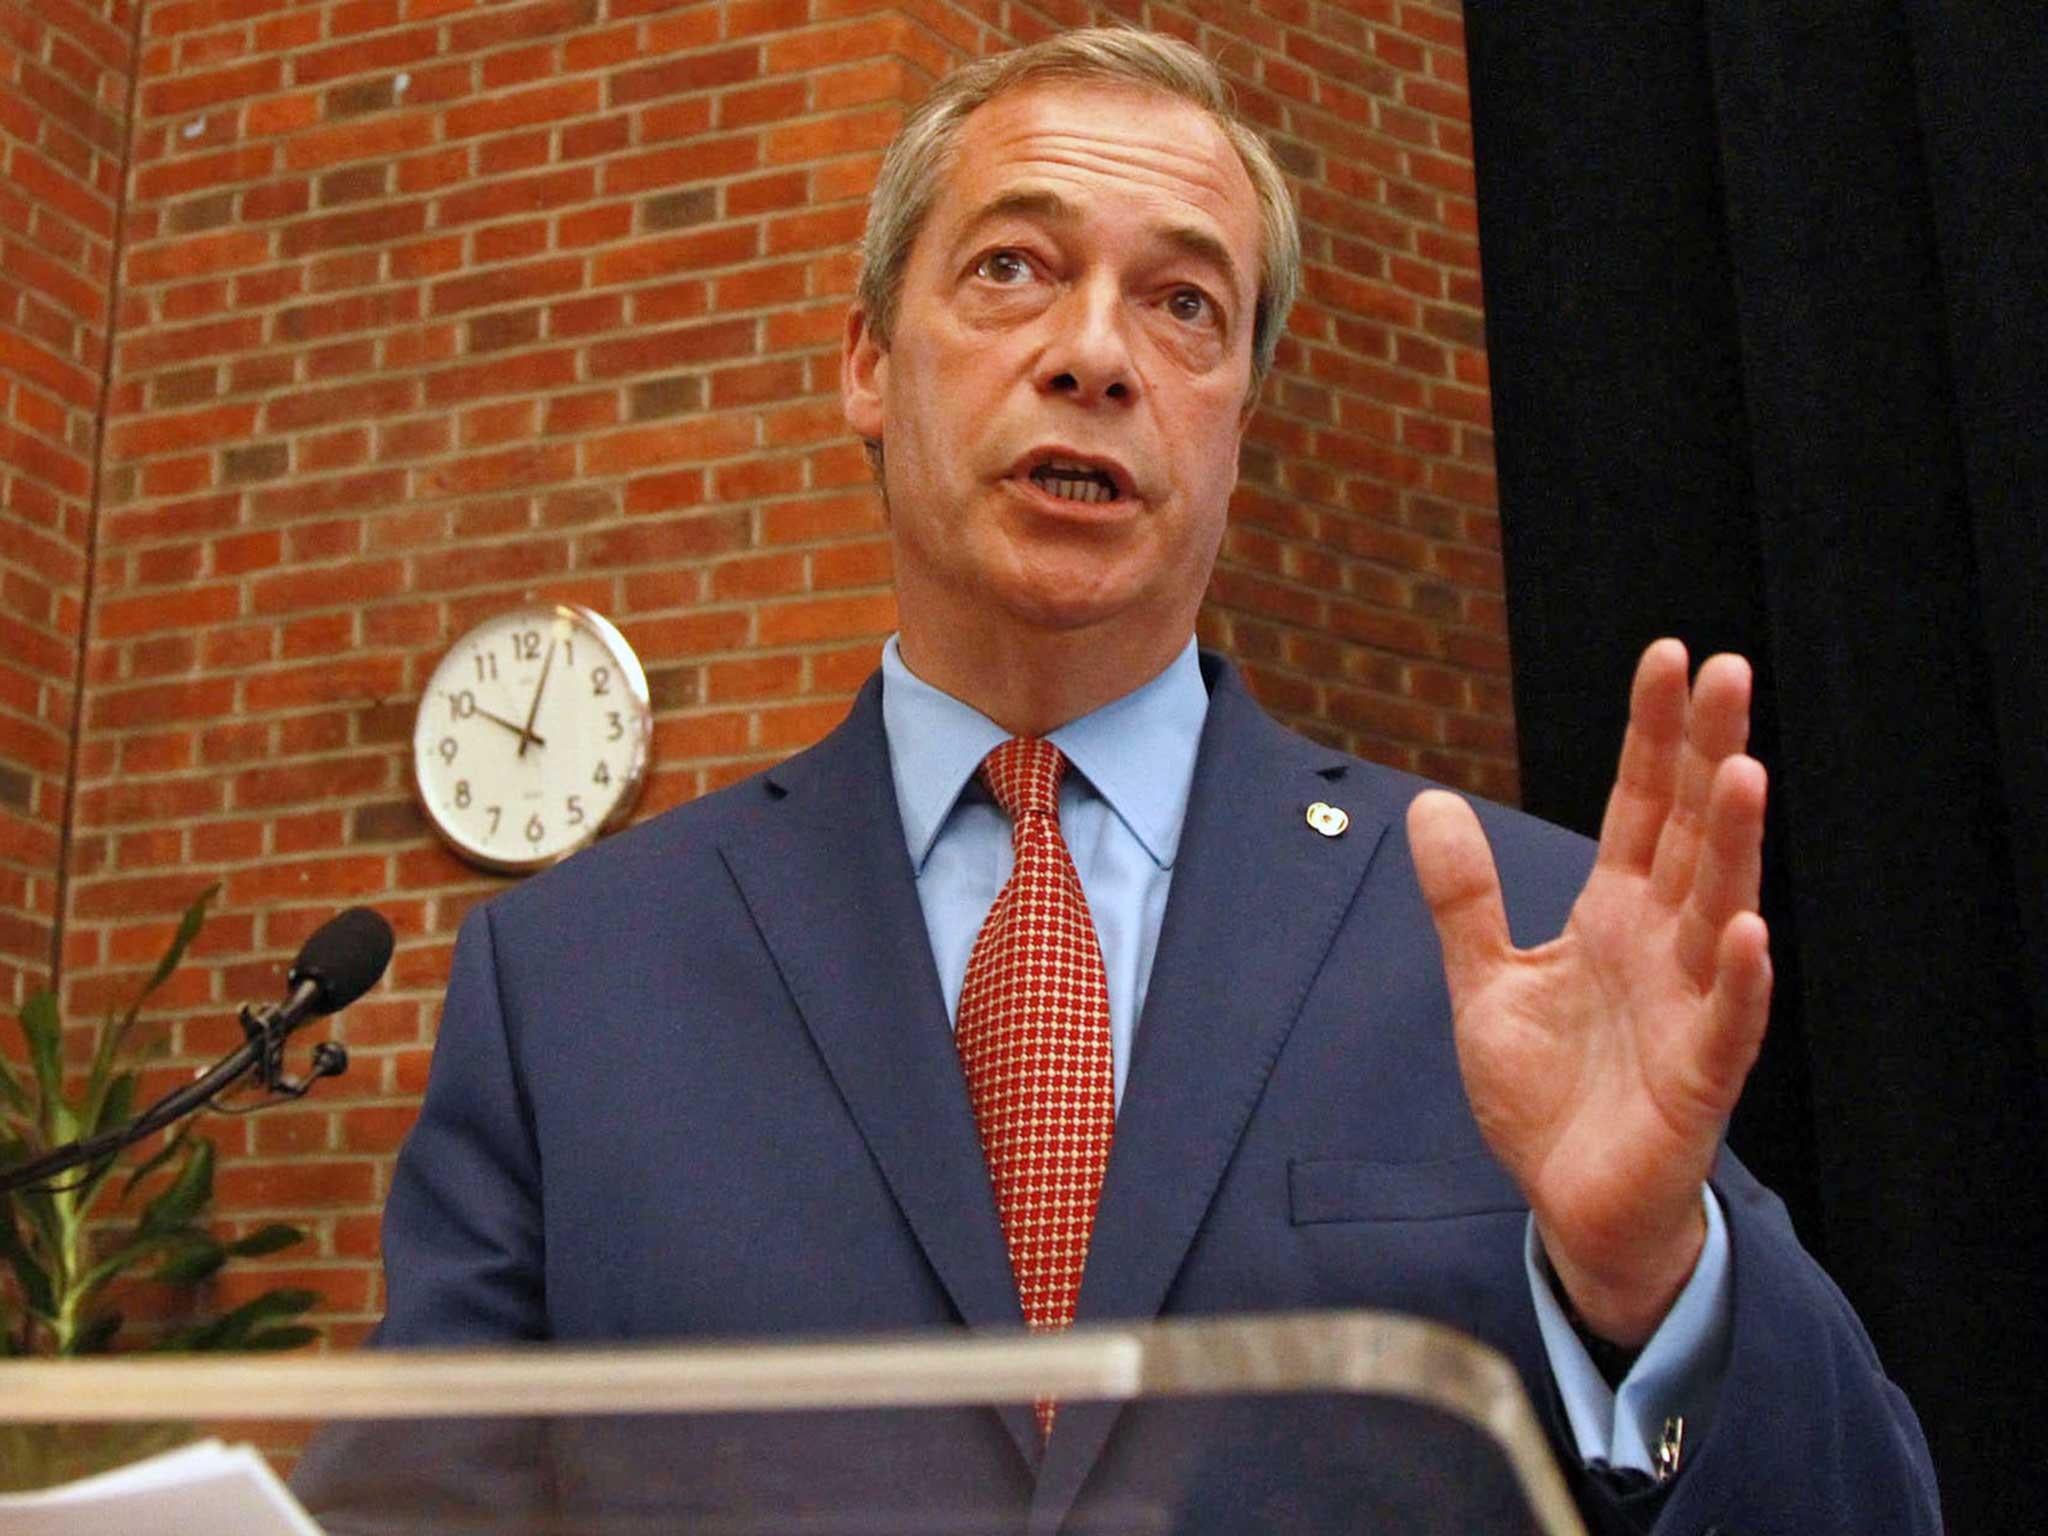 Nigel Farage announced he was standing down as Ukip leader on 4 July